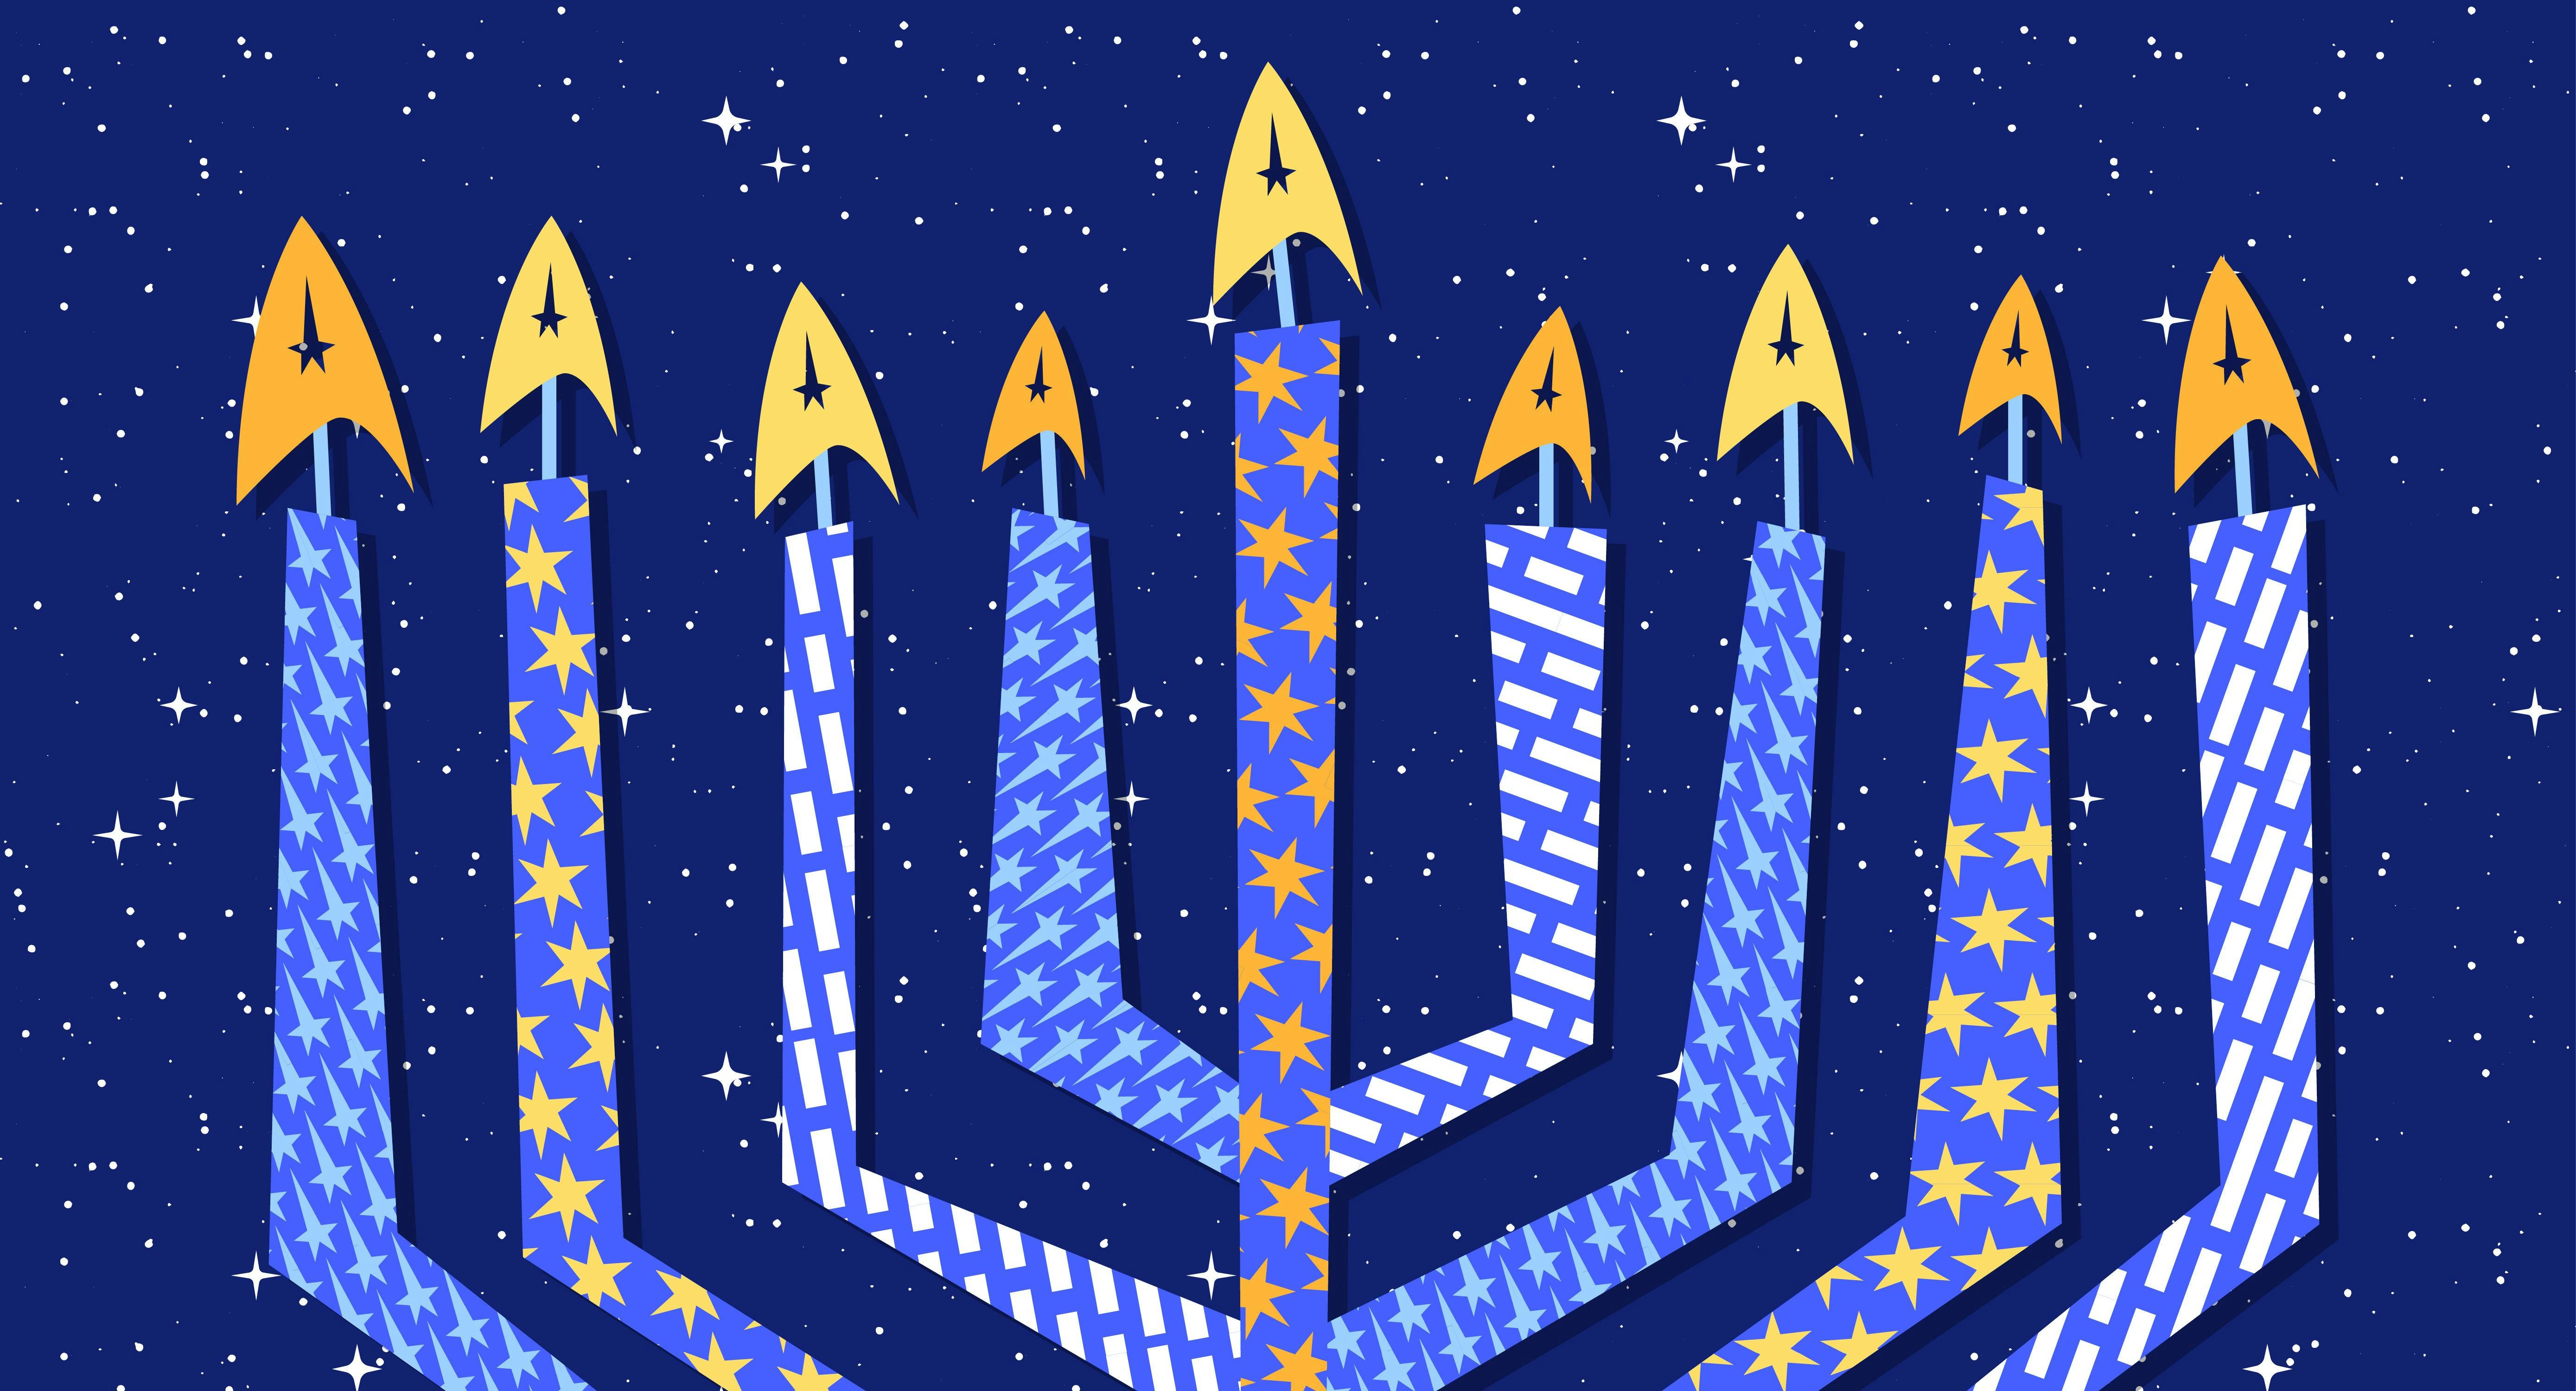 Illustrated banner of the Hanukkah menorah with Star Trek deltas as flames